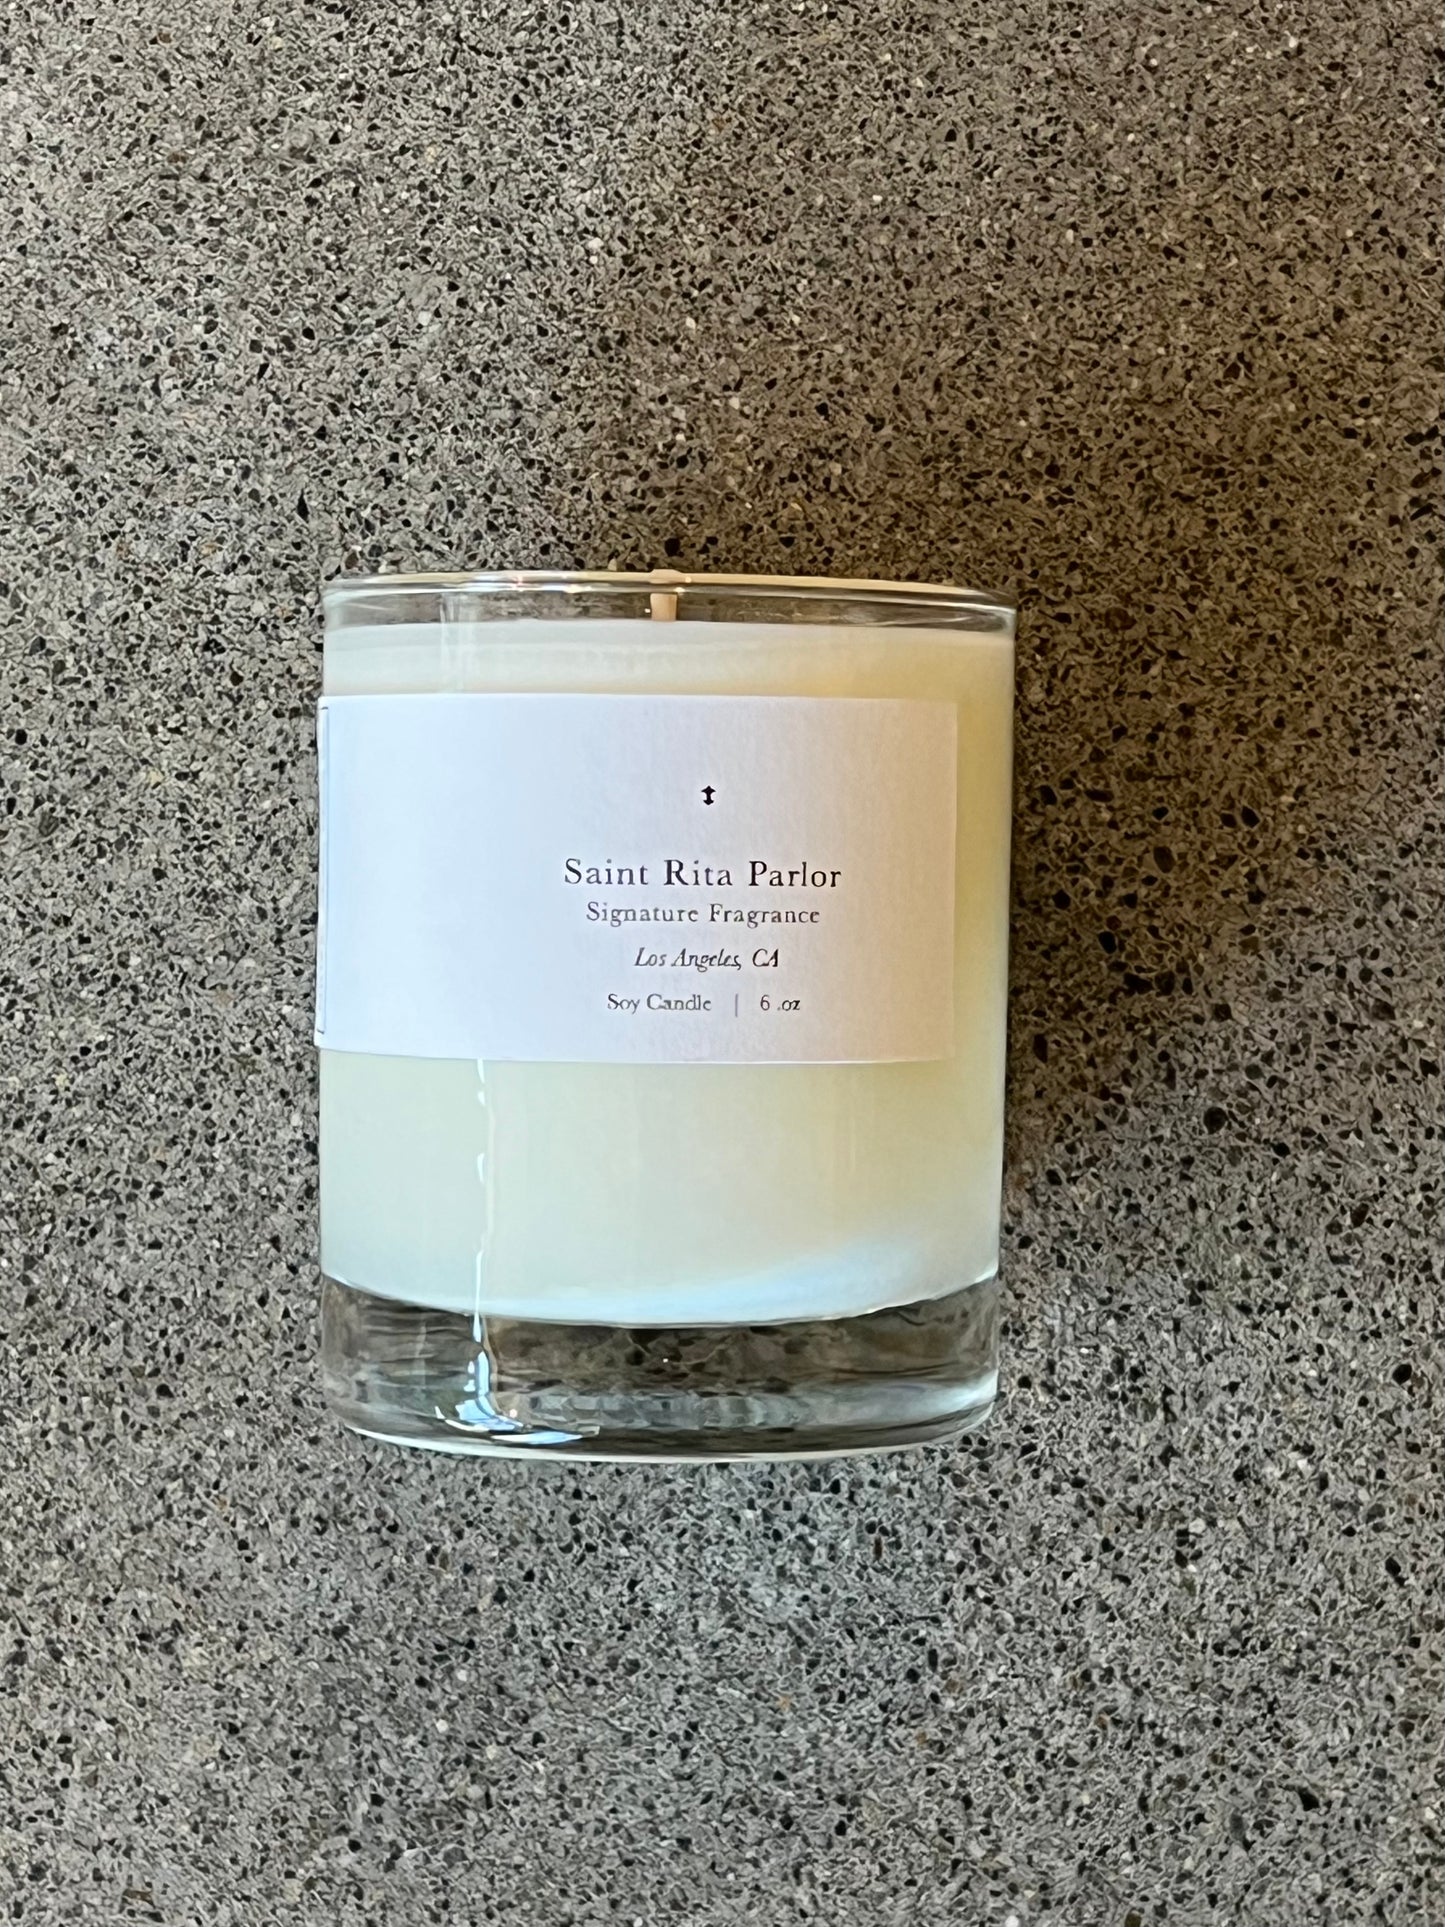 Saint Rita Parlor  - Candles in all three fragrances